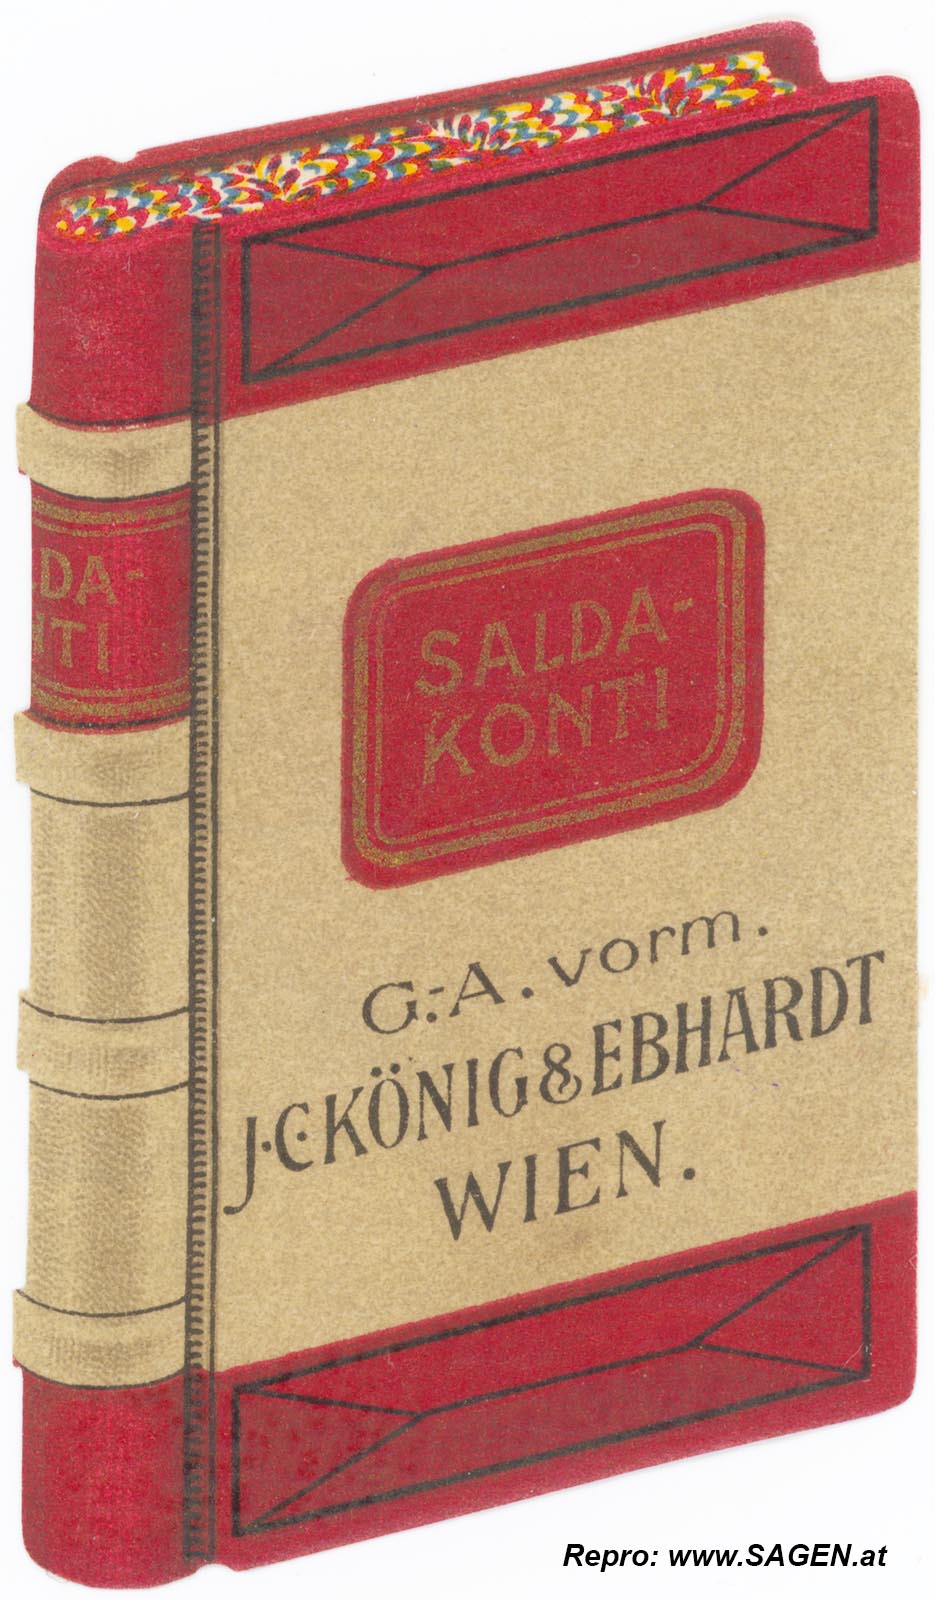 Reklamemarke König & Ebhardt Wien